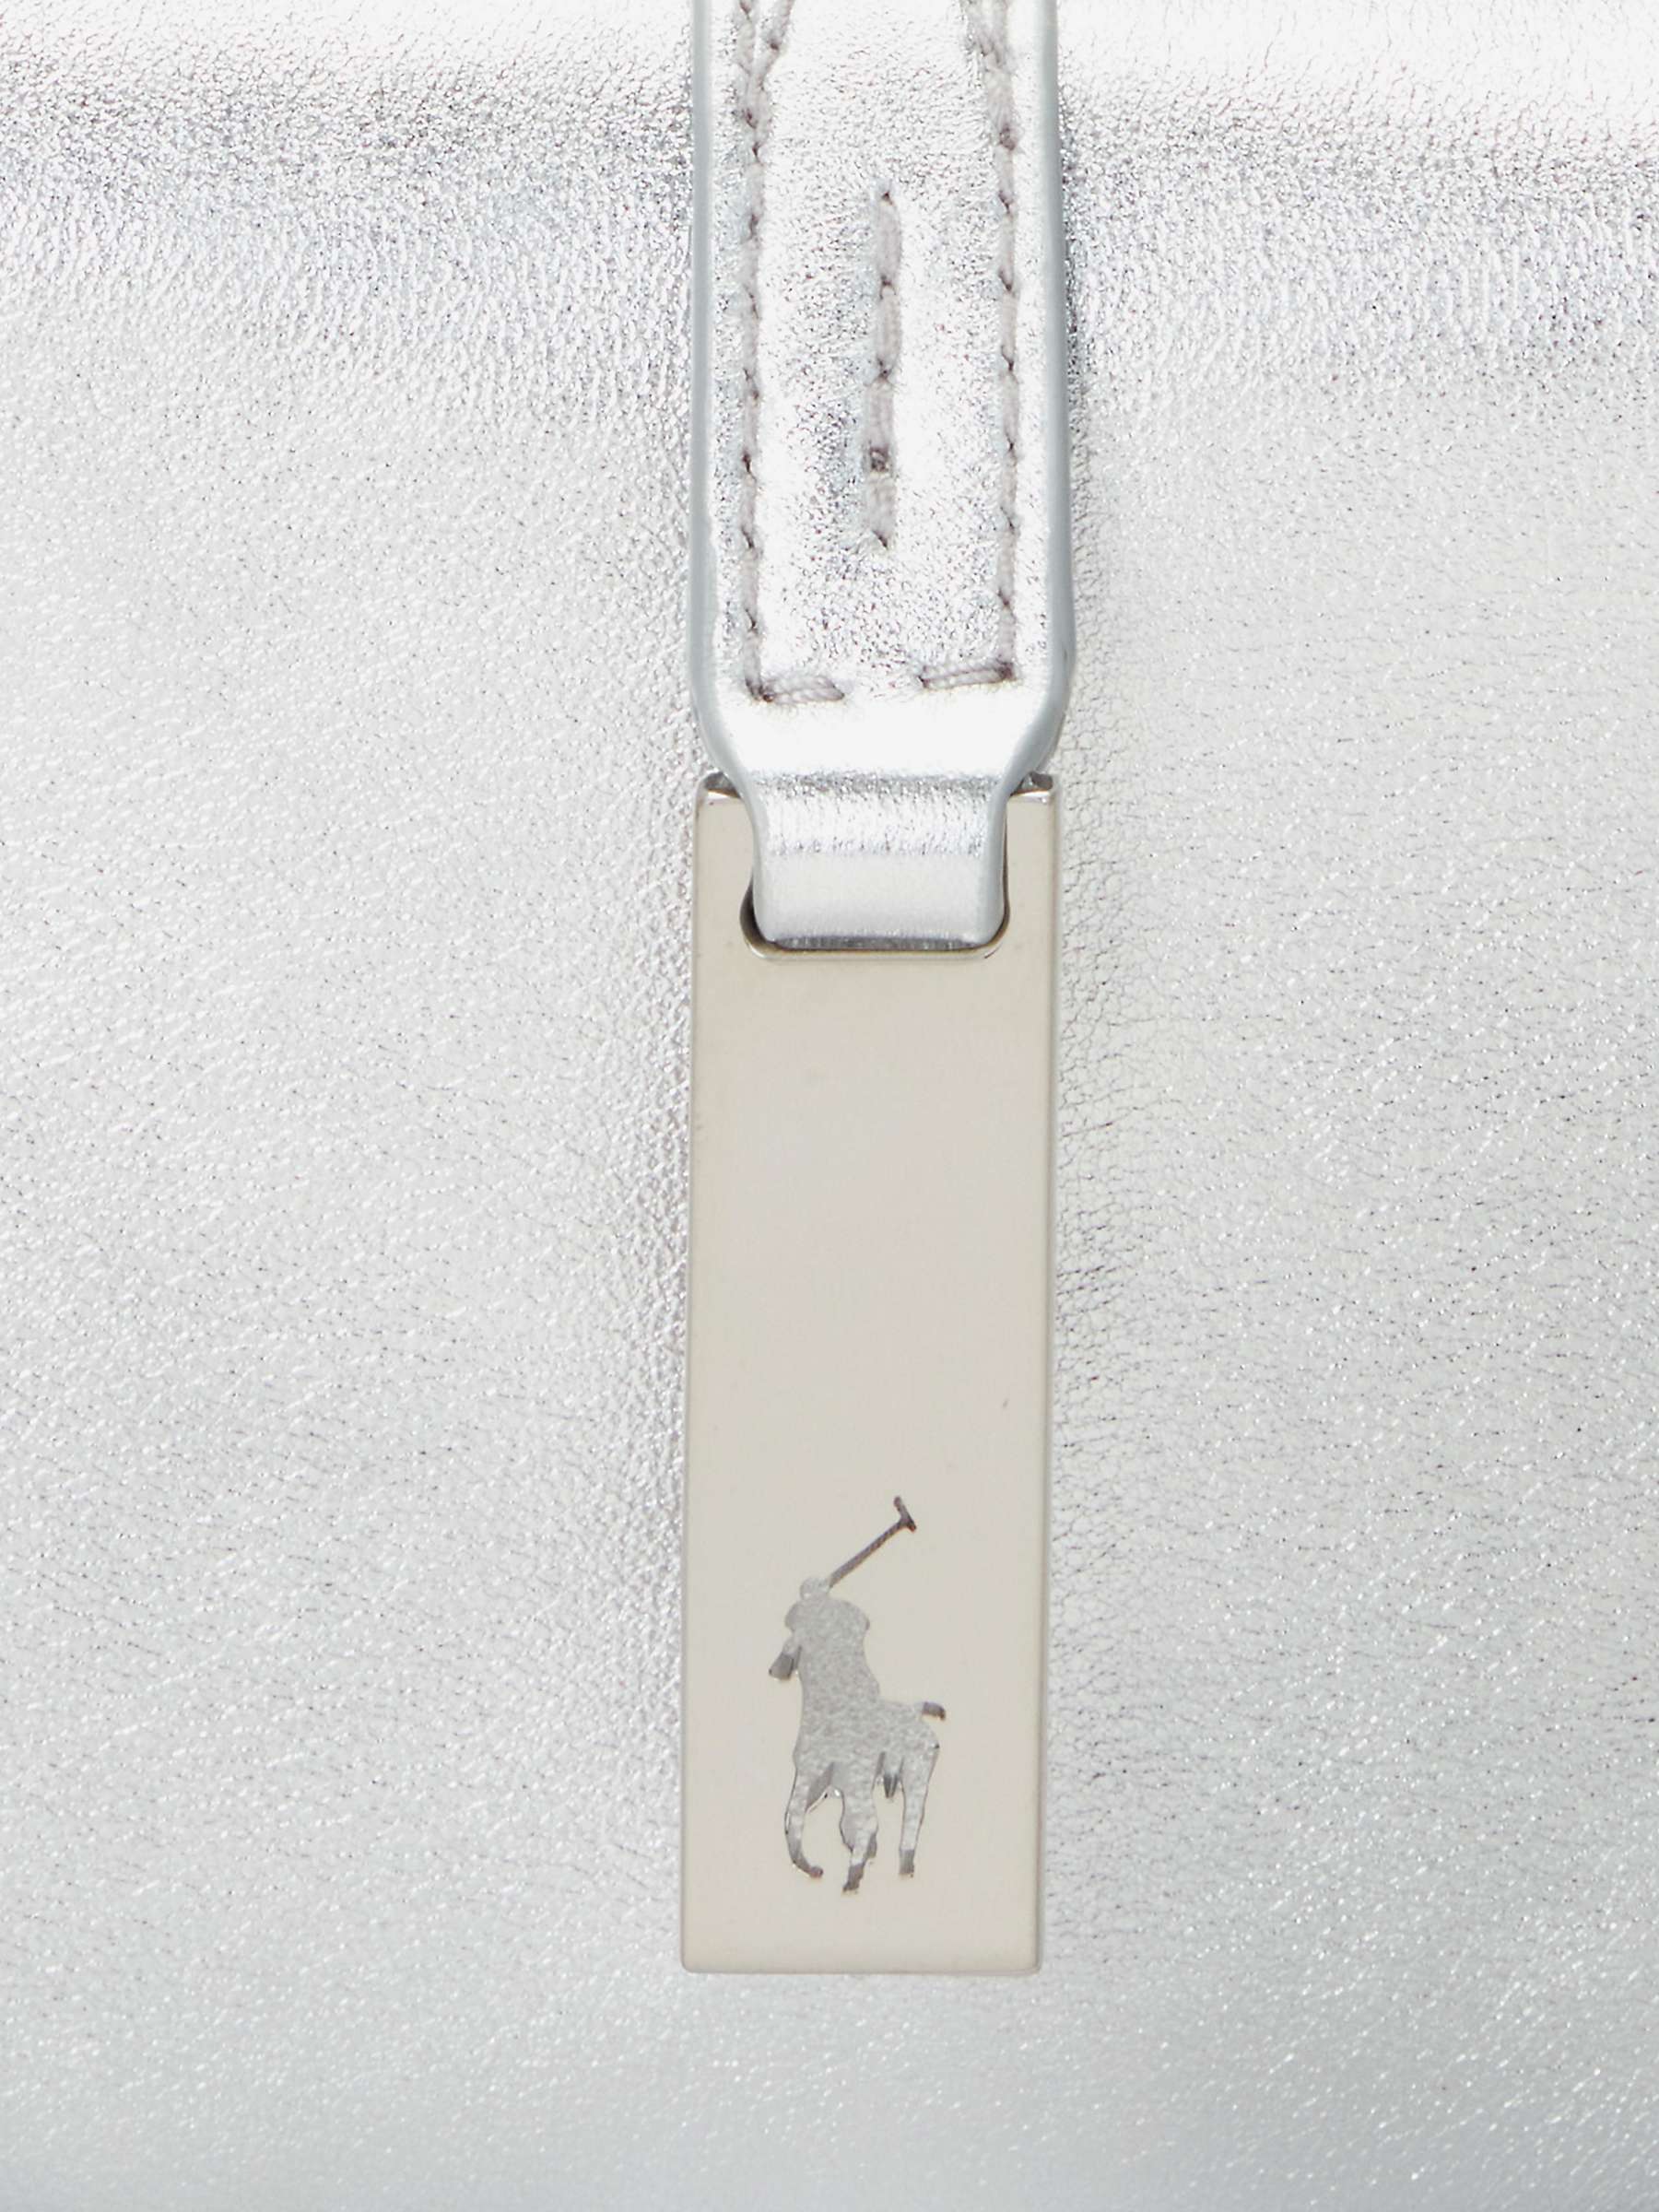 Buy Polo Ralph Lauren ID Mini Leather Shoulder Bag, Silver Online at johnlewis.com